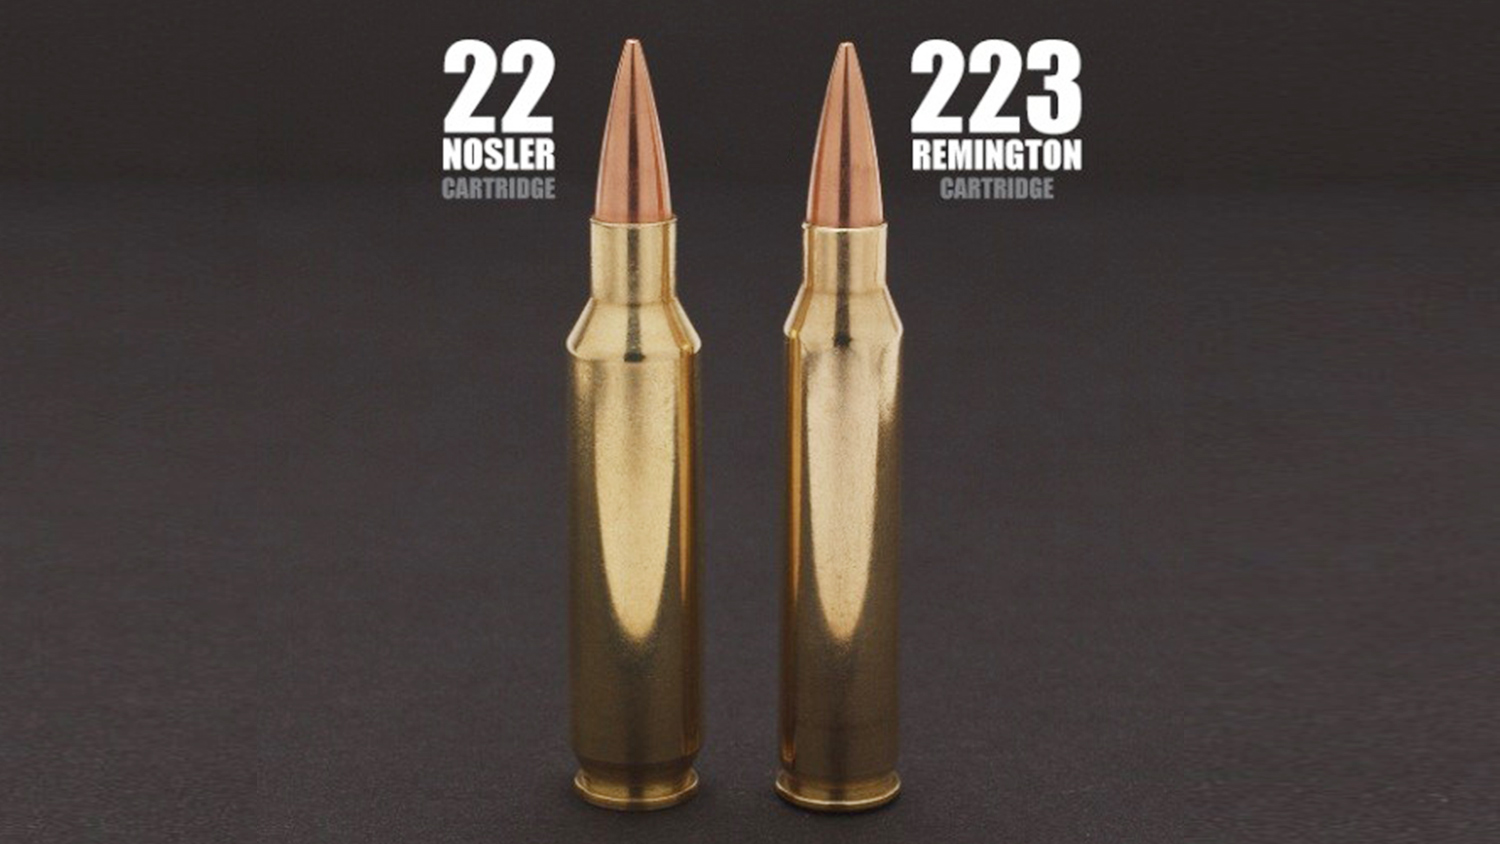 22 Nosler and .223 Remington